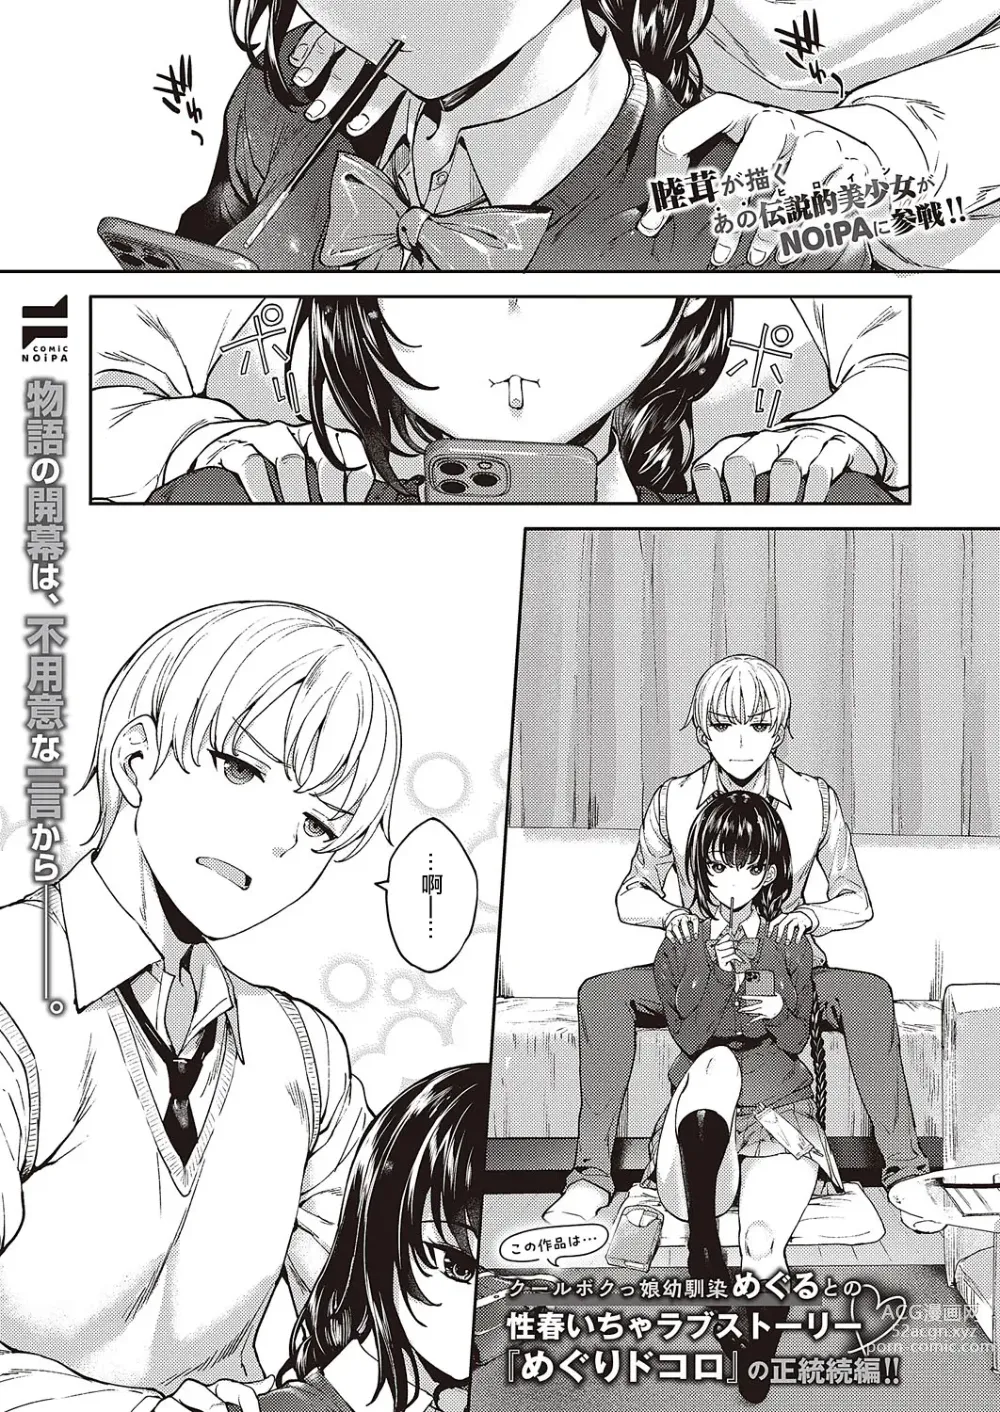 Page 1 of manga めぐりどころ 1歩